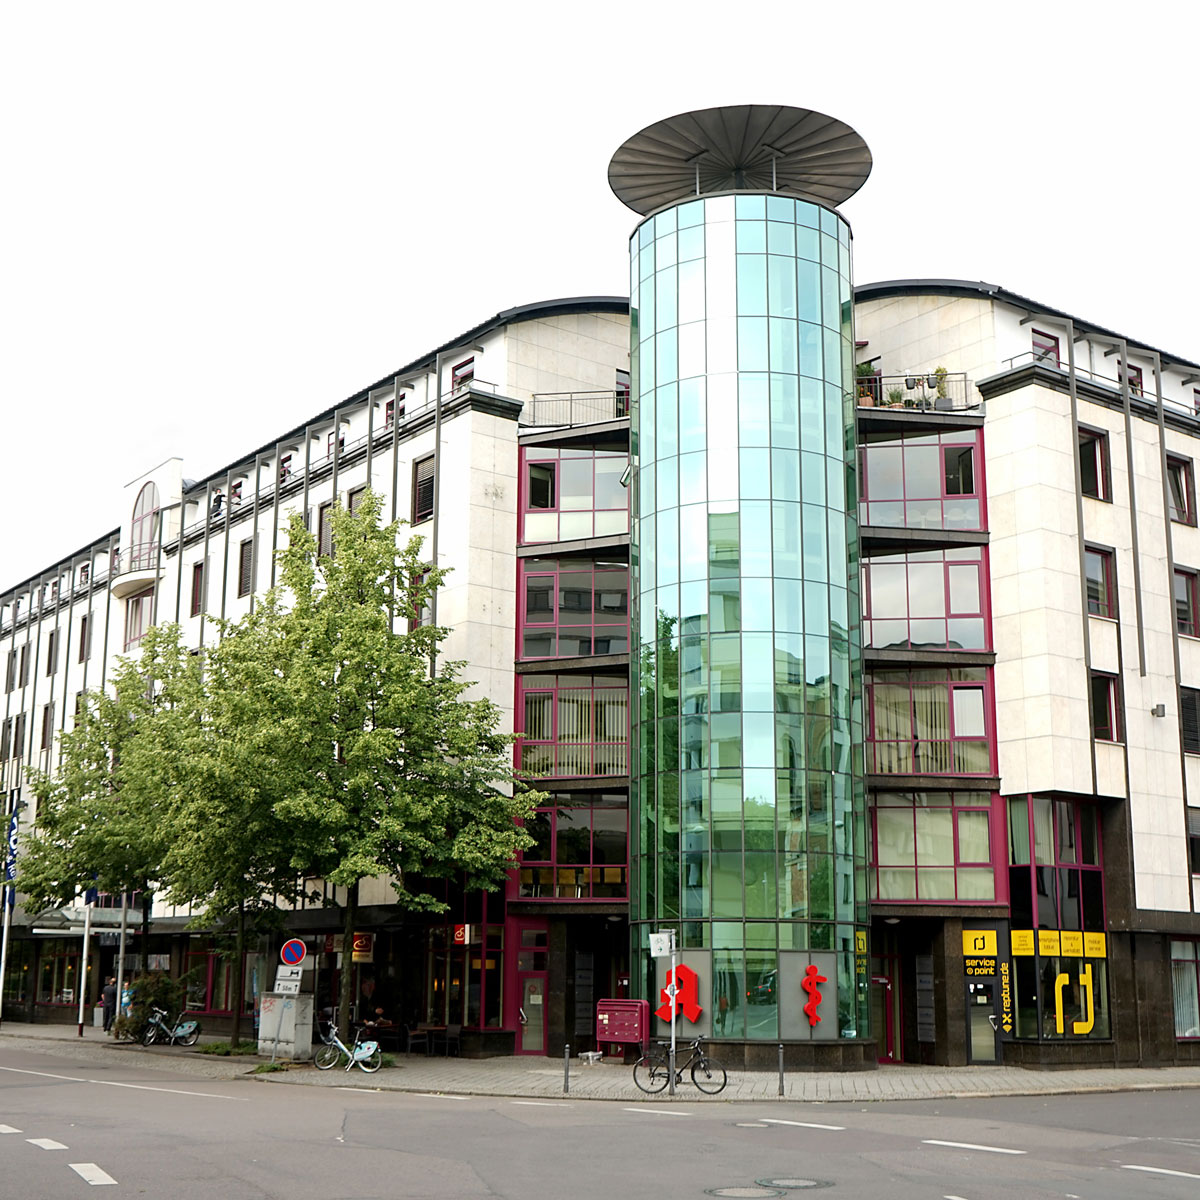 Dorint Hotel Leipzig